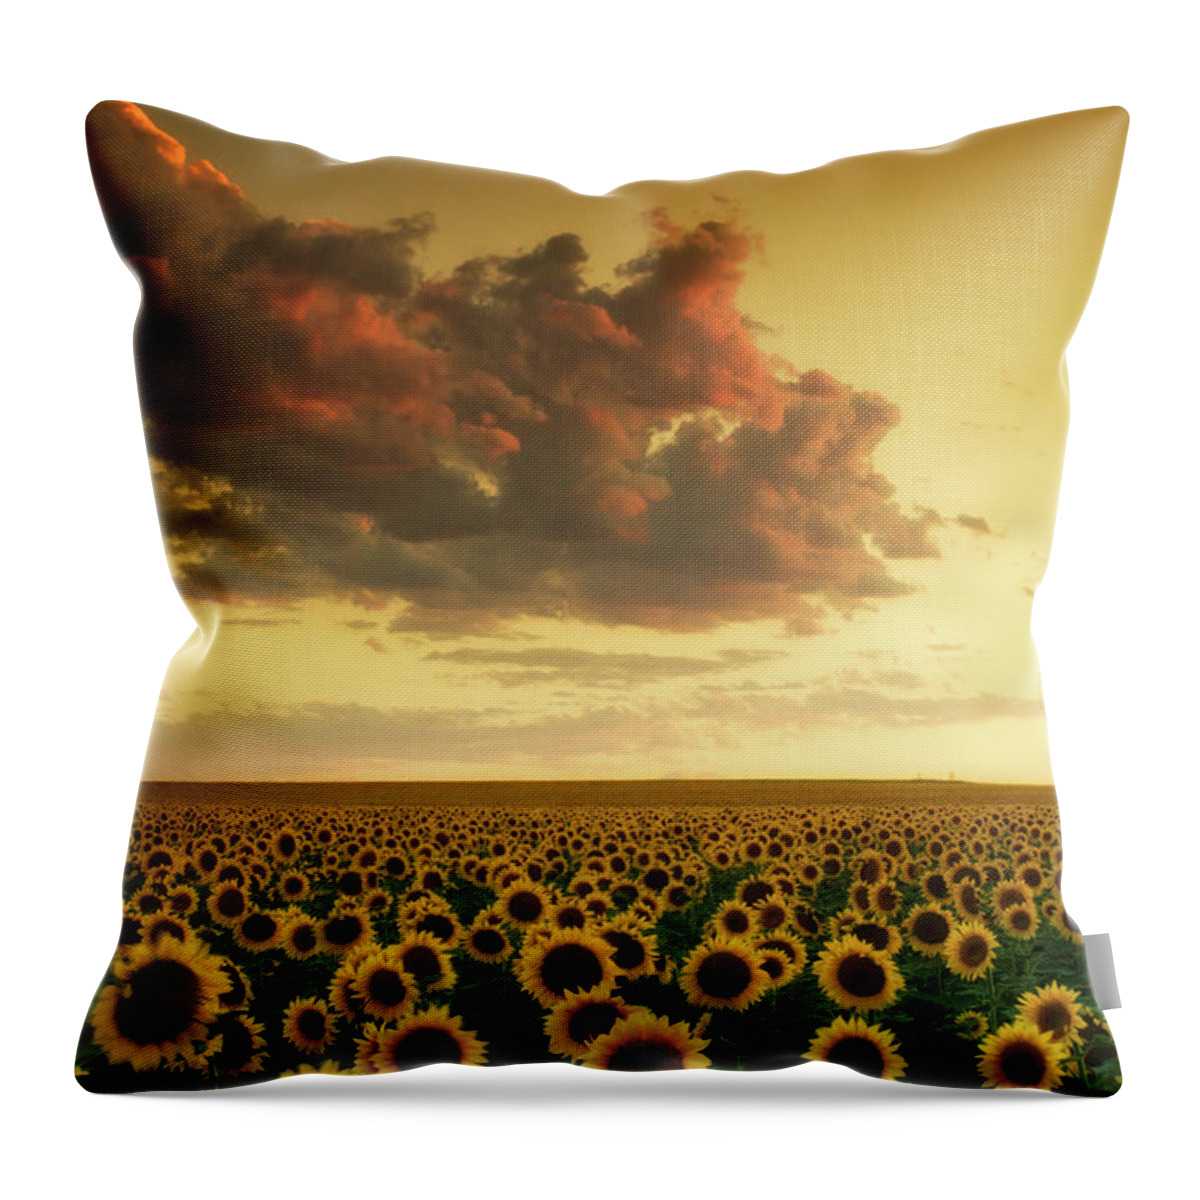 Colorado Throw Pillow featuring the photograph Golden Sunflower Skies by John De Bord